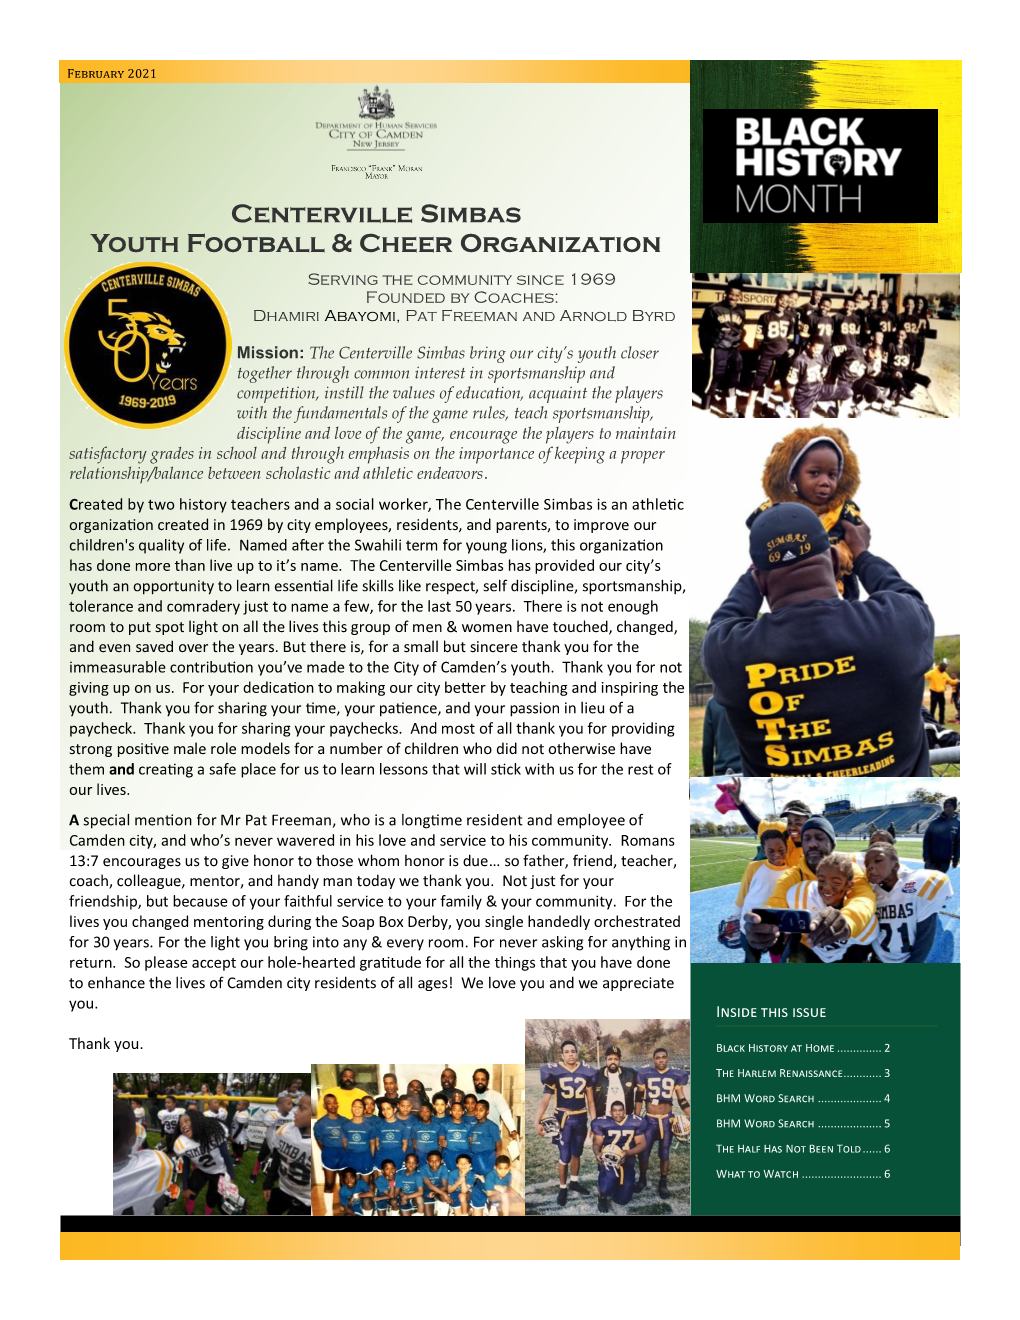 Centerville Simbas Youth Football & Cheer Organization